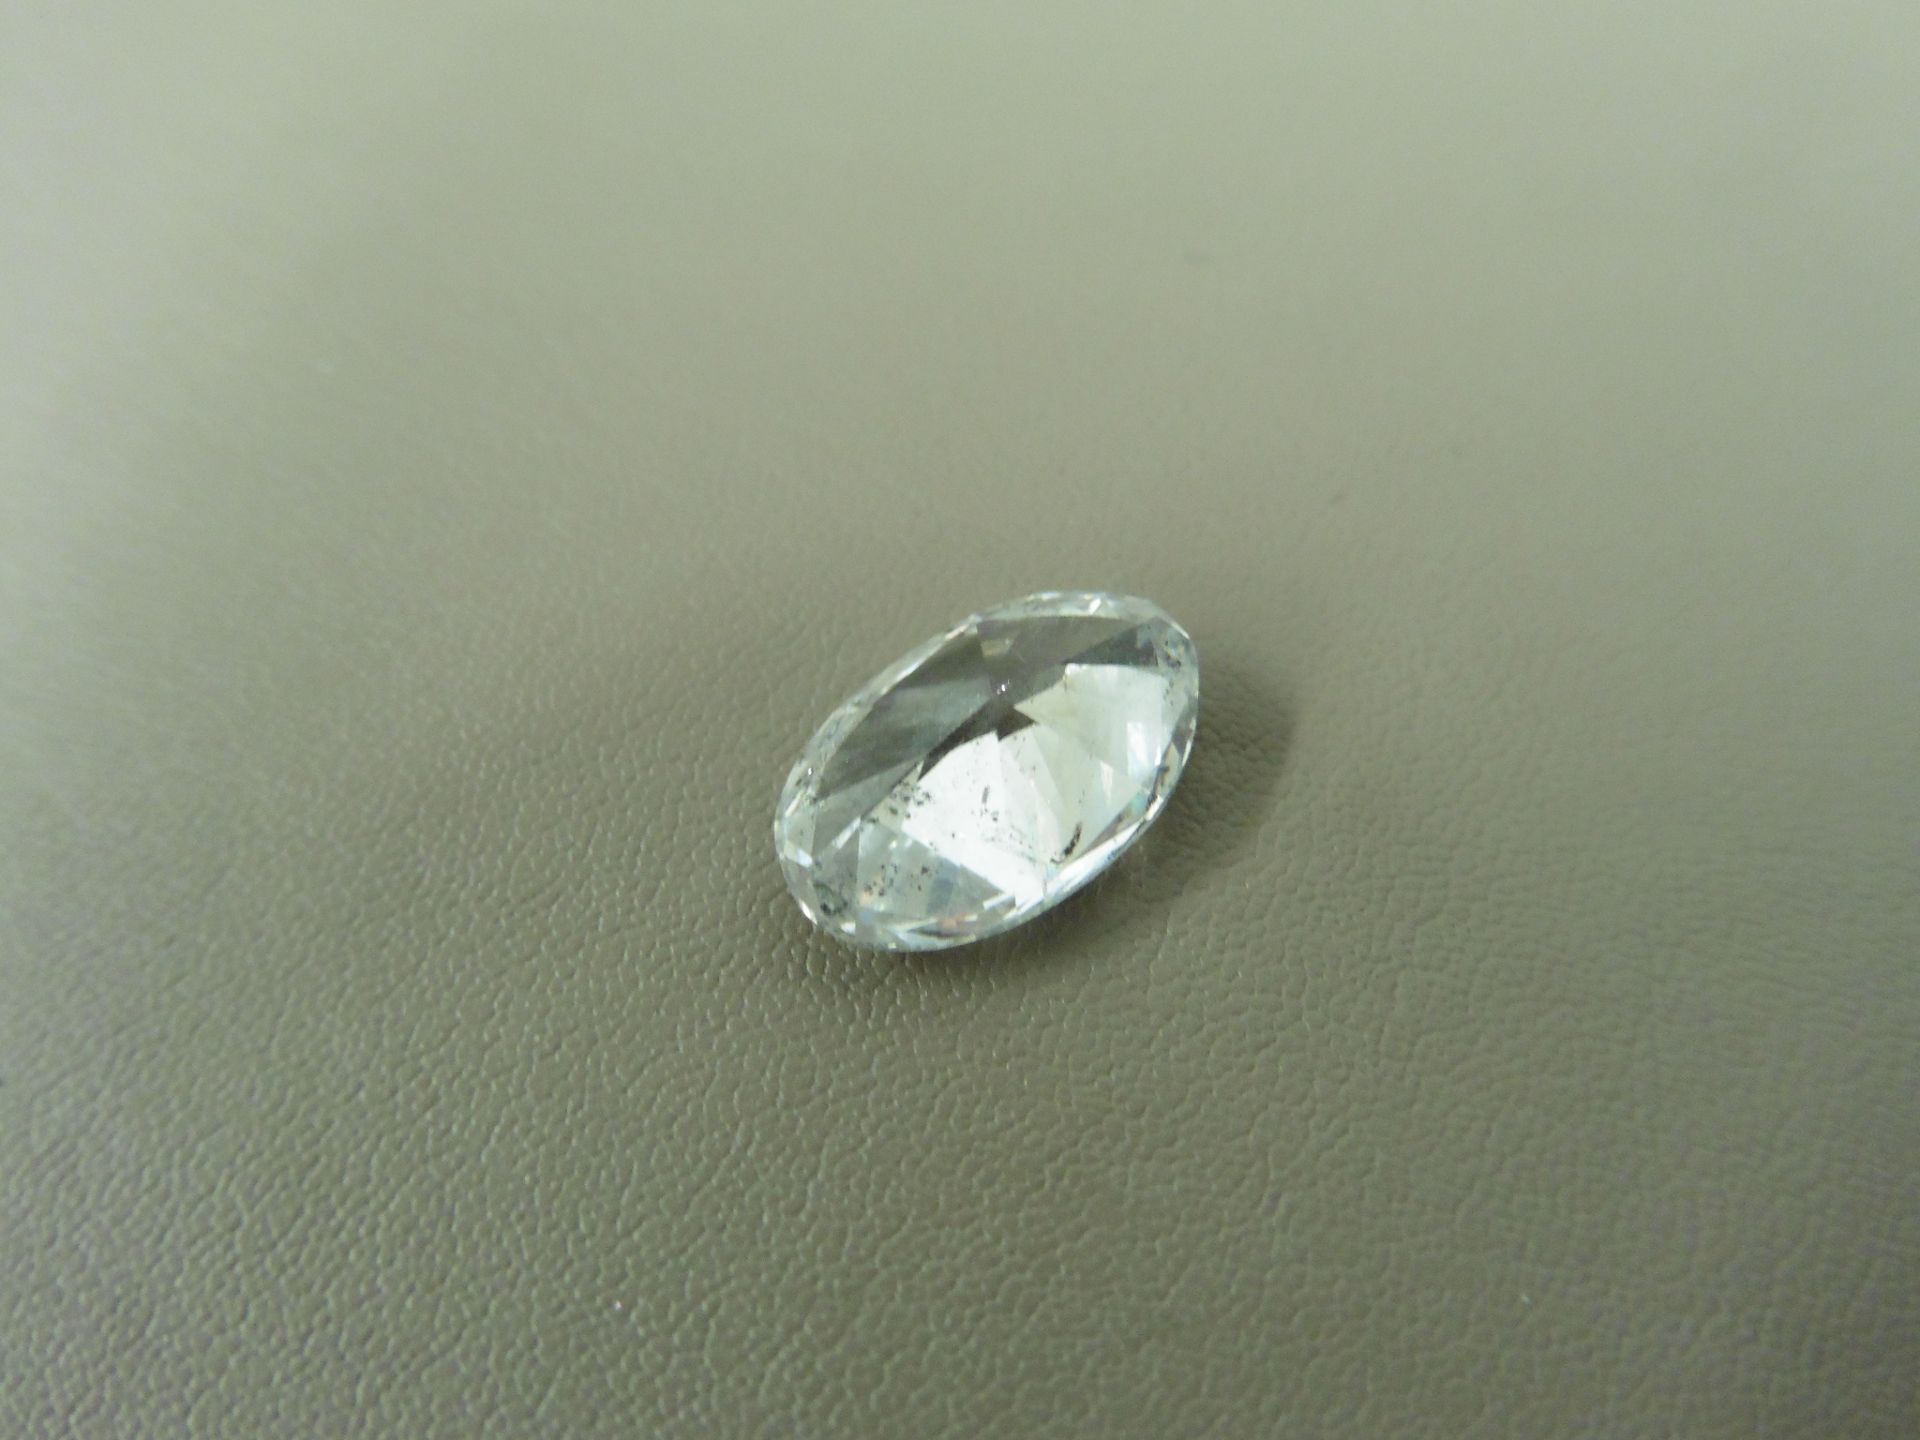 3.50ct enhanced oval cut diamond. F colour and I1 clarity ( clarity enhanced ).EGL certification. - Image 2 of 3